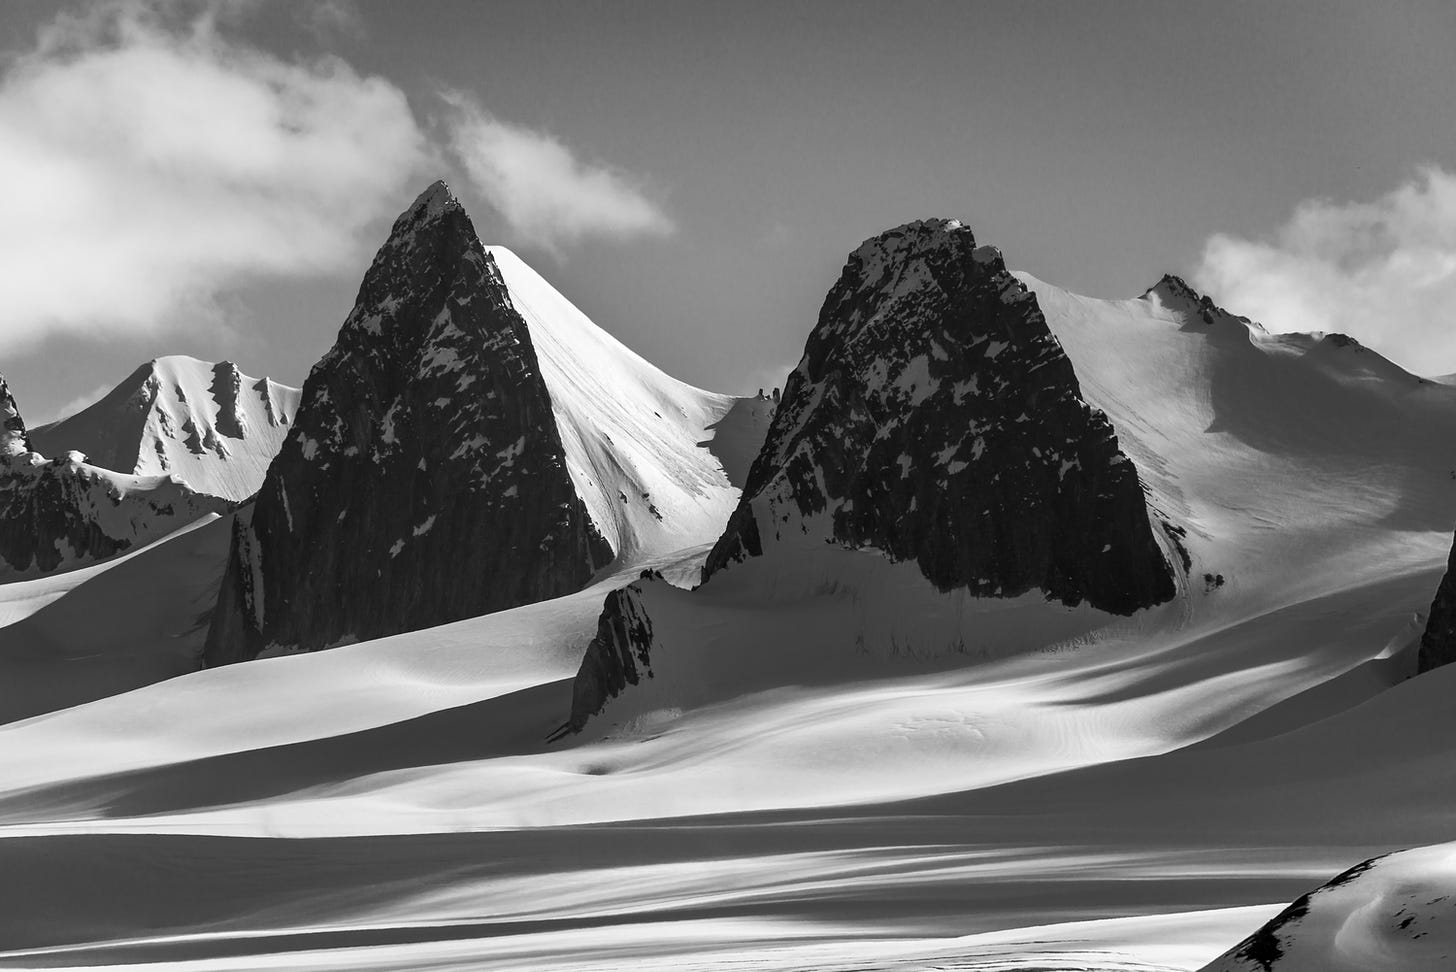 Black and white cliffs on snowy glacier